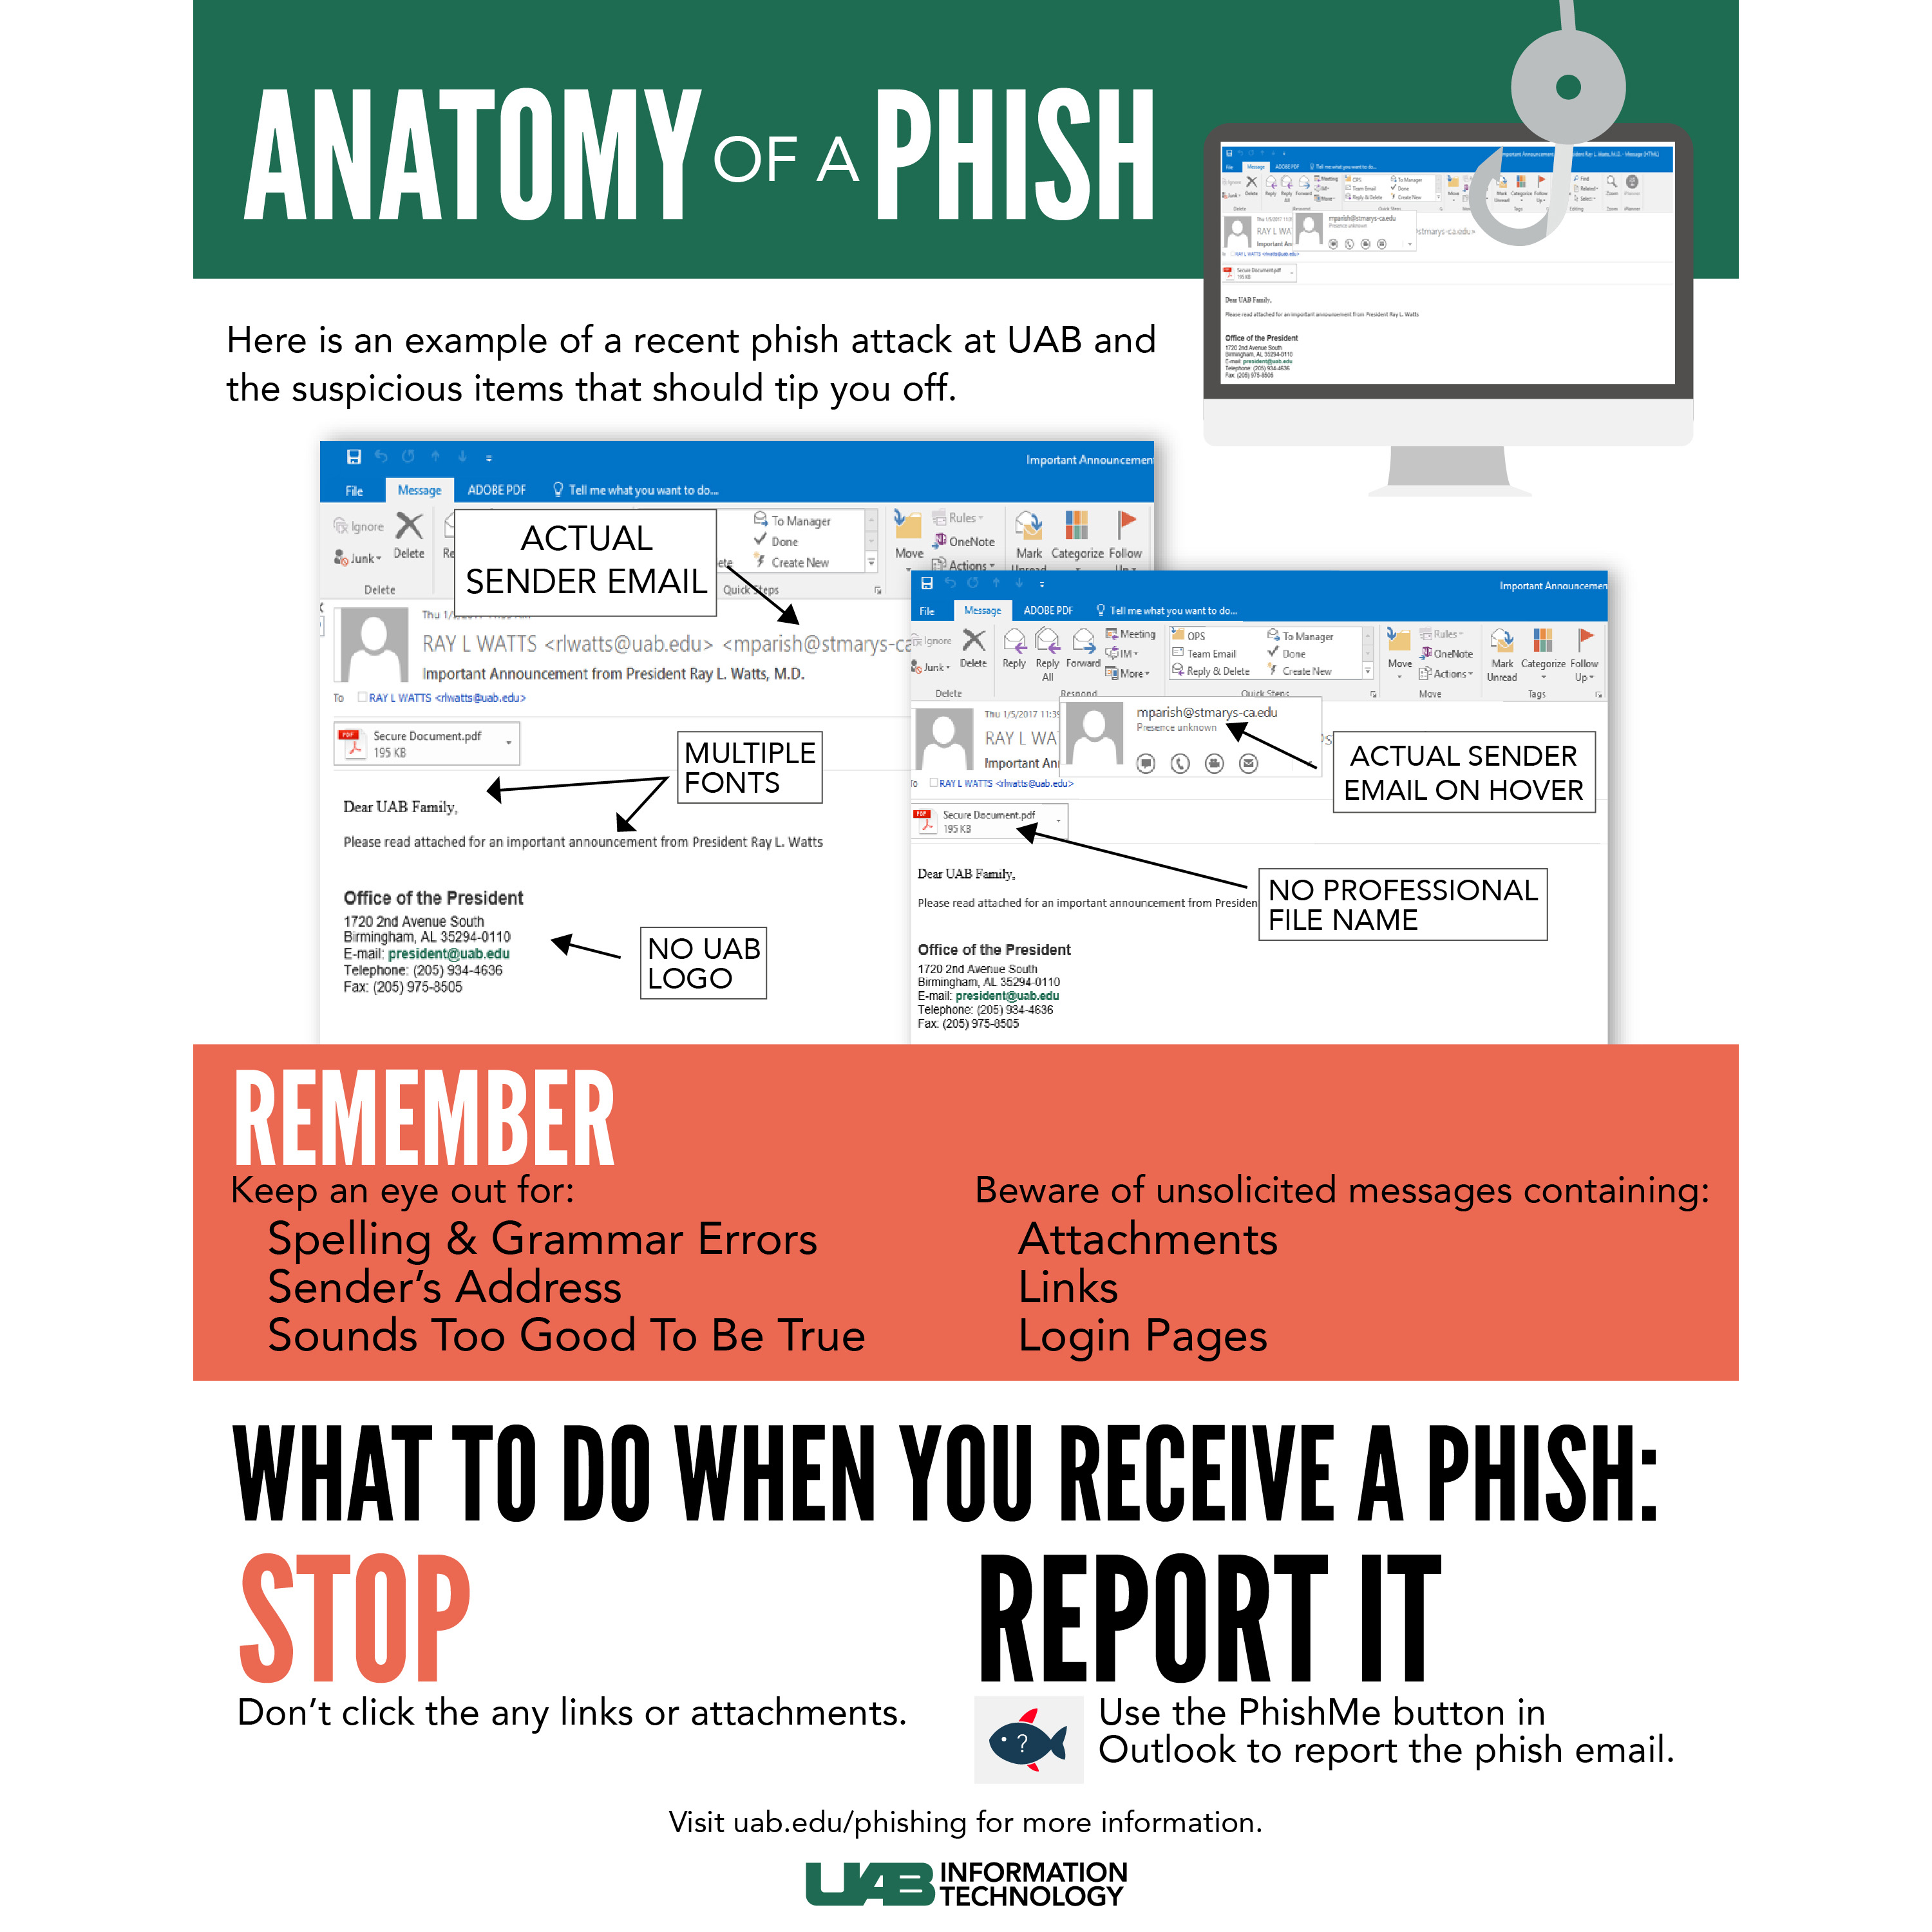 Anatomy of a phish